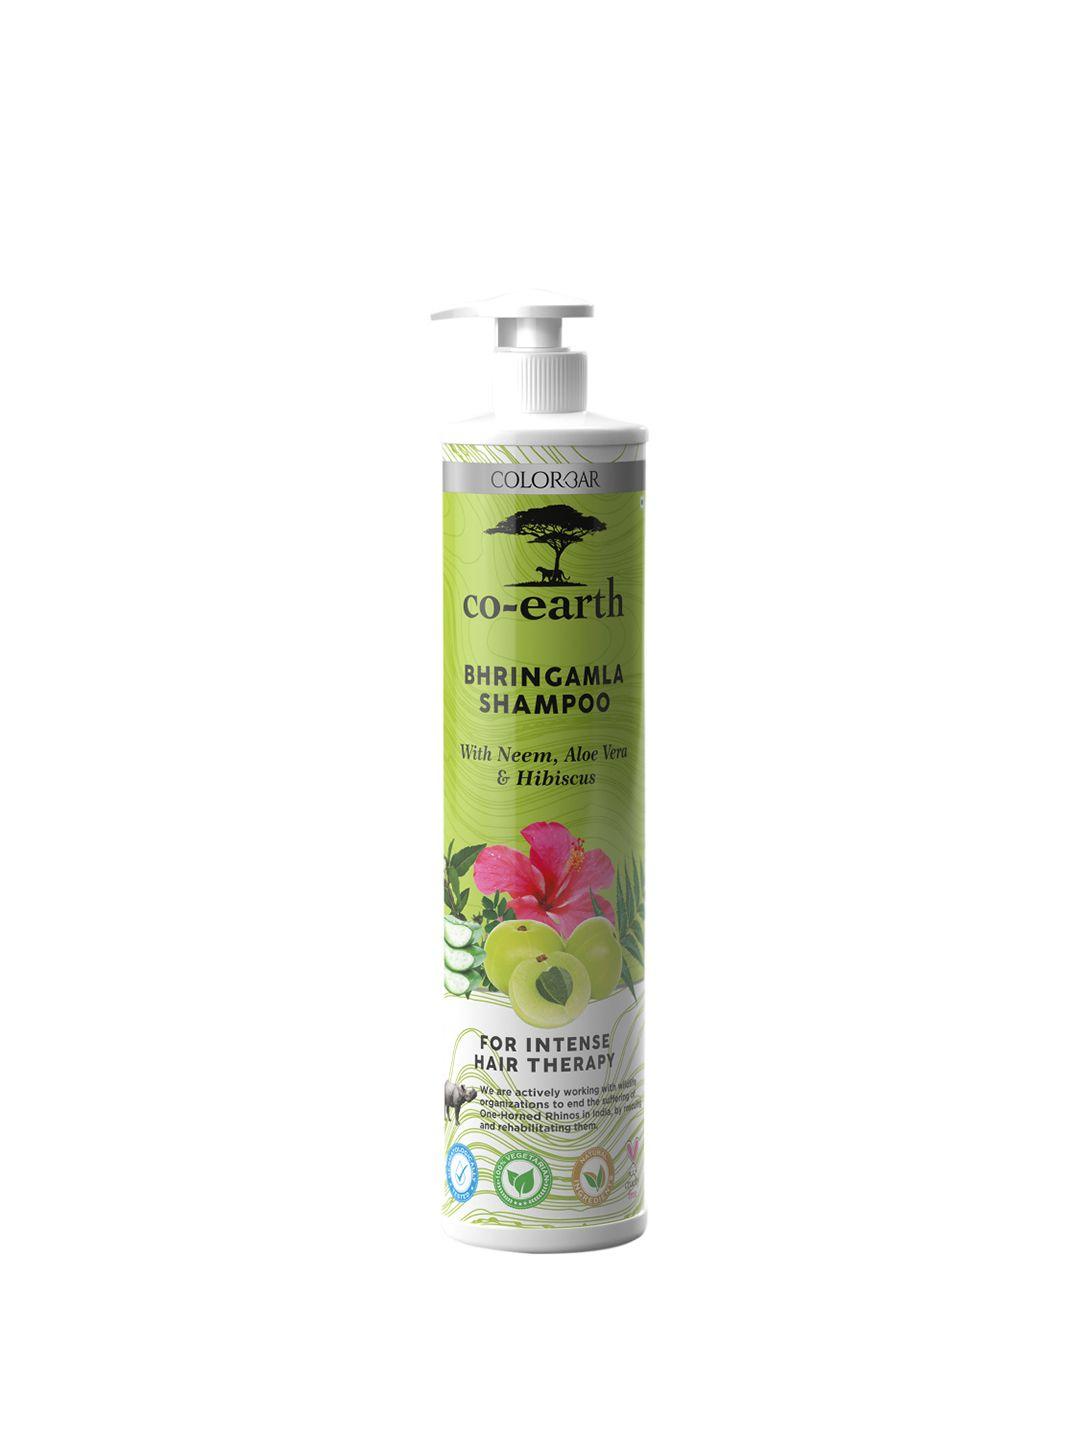 colorbar co-earth bhringamla shampoo with neem aloe vera & hibiscus - 300 ml